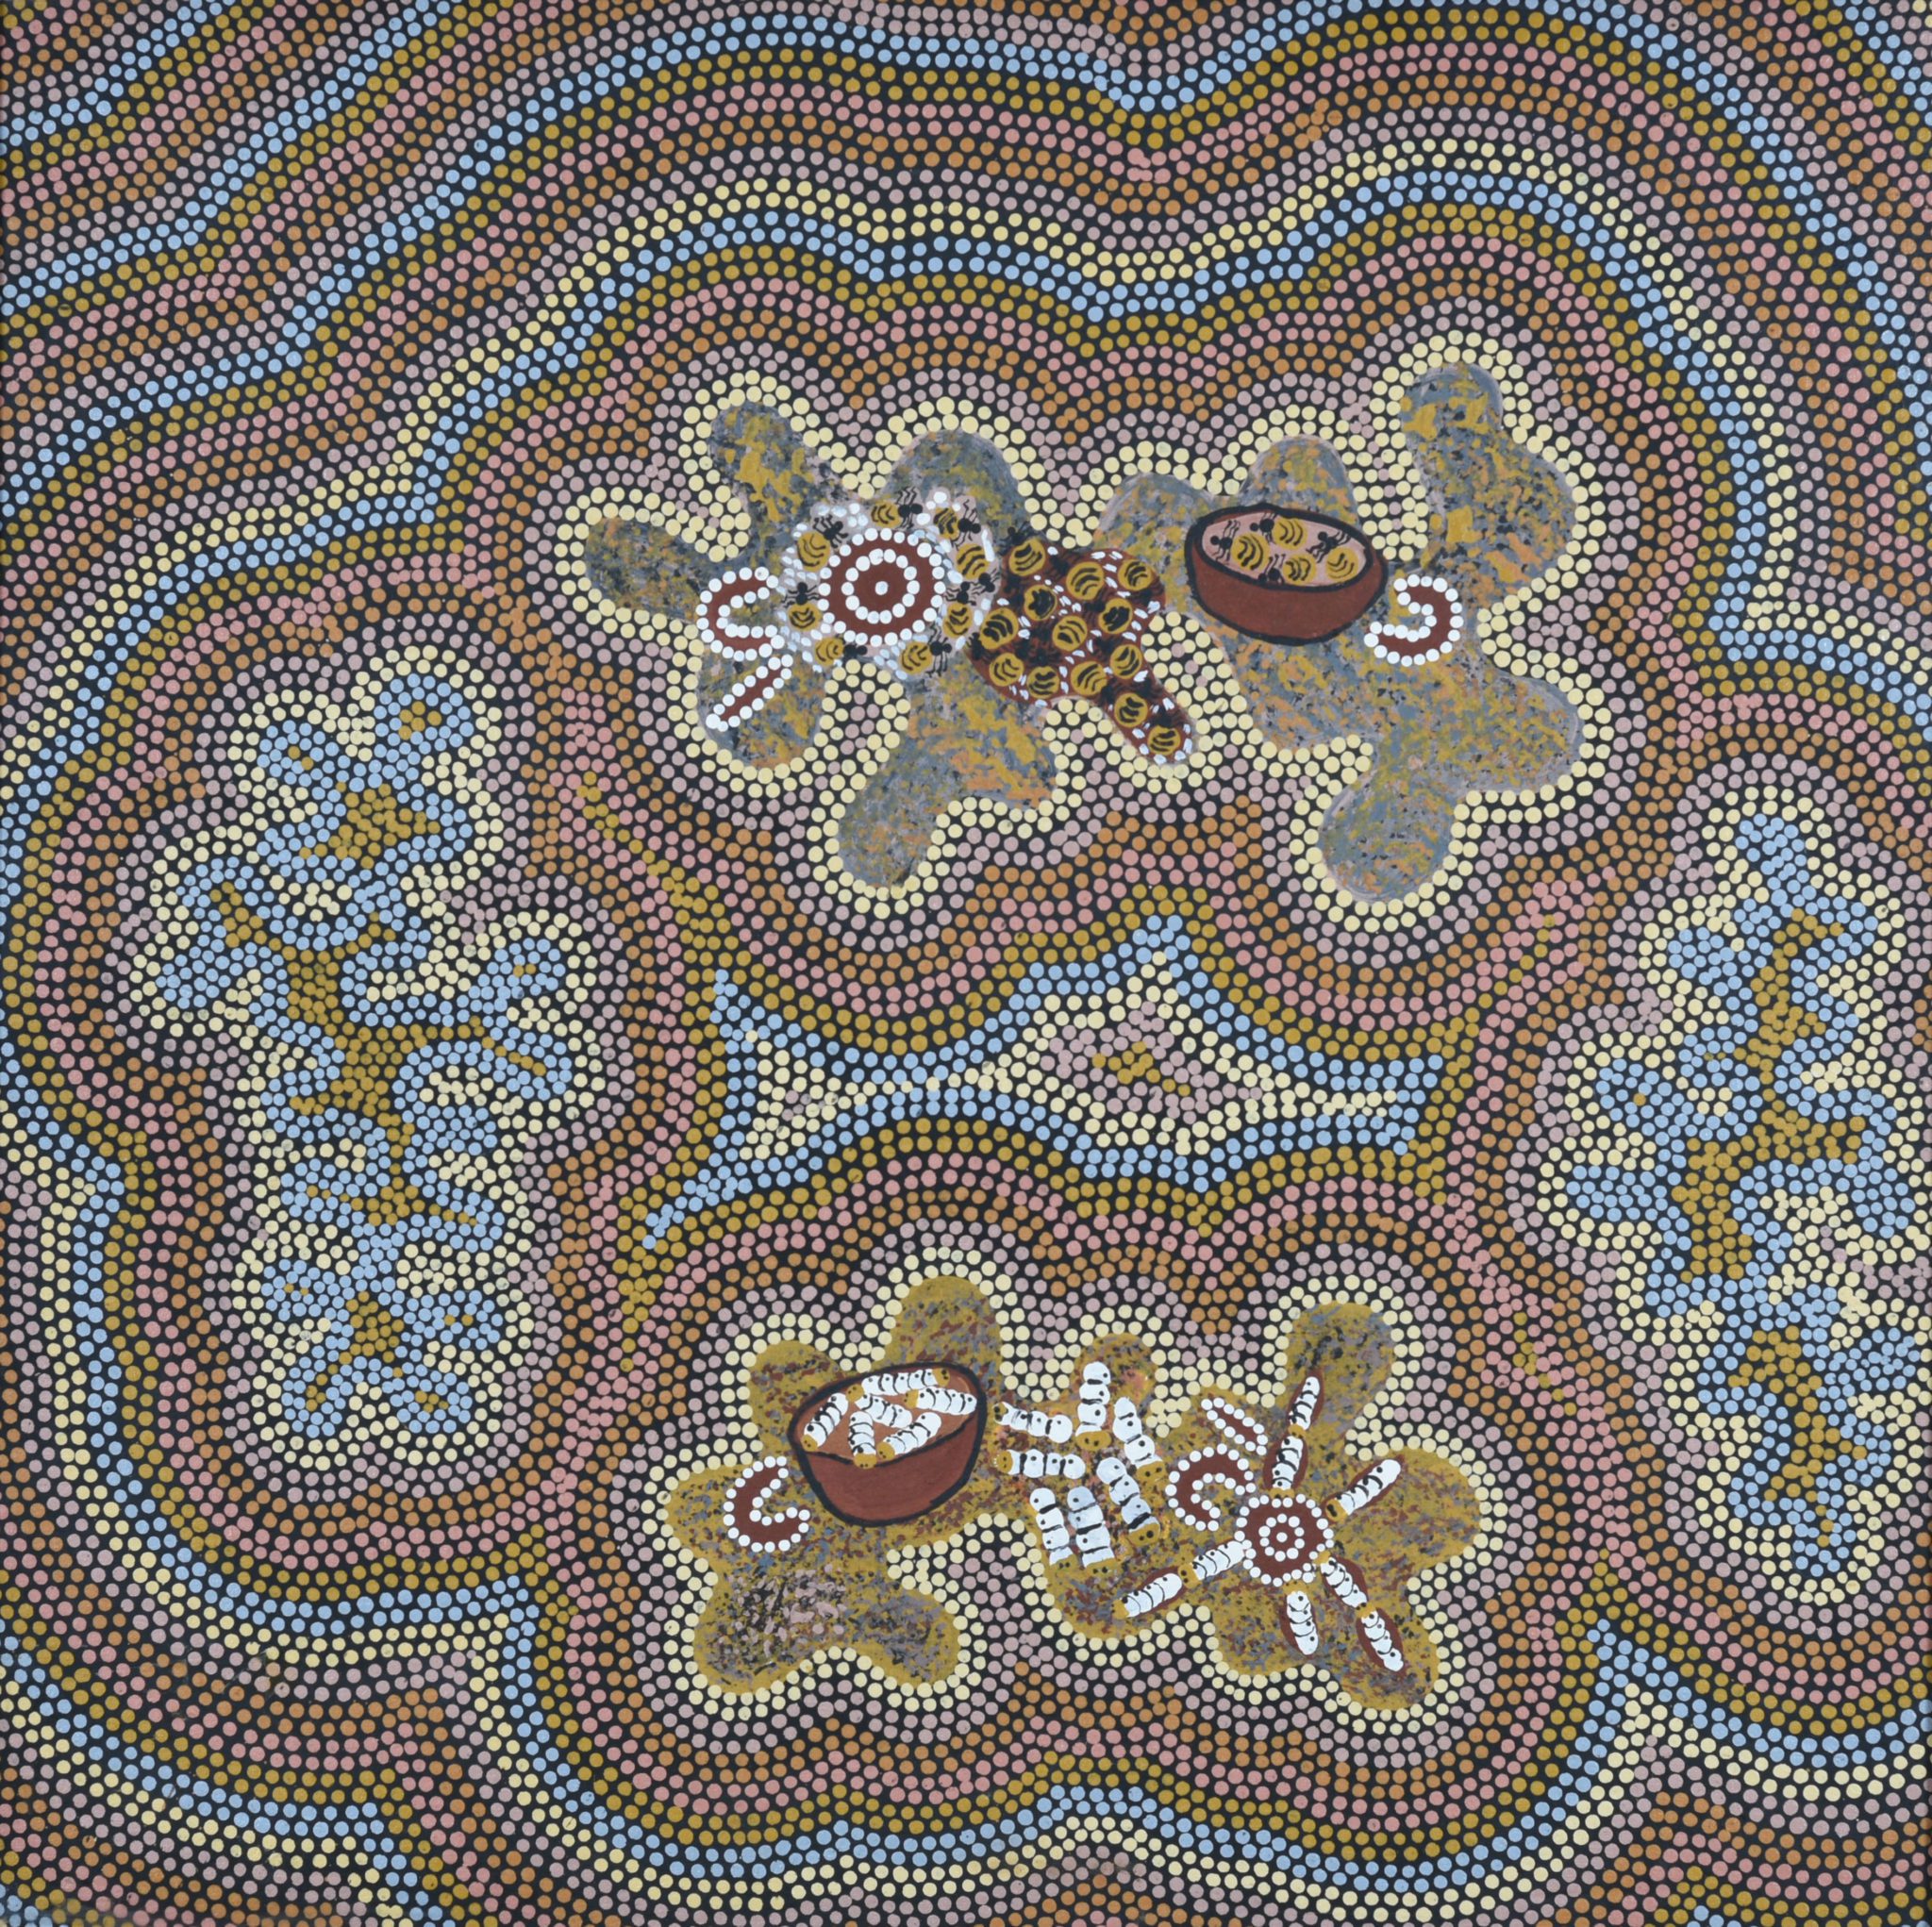 Sandra Nampitjinpa, Witchetty Grub and Honey Ant Dreaming, 1990, Acrylic on canvas, CBUS Collection of Australian Art.